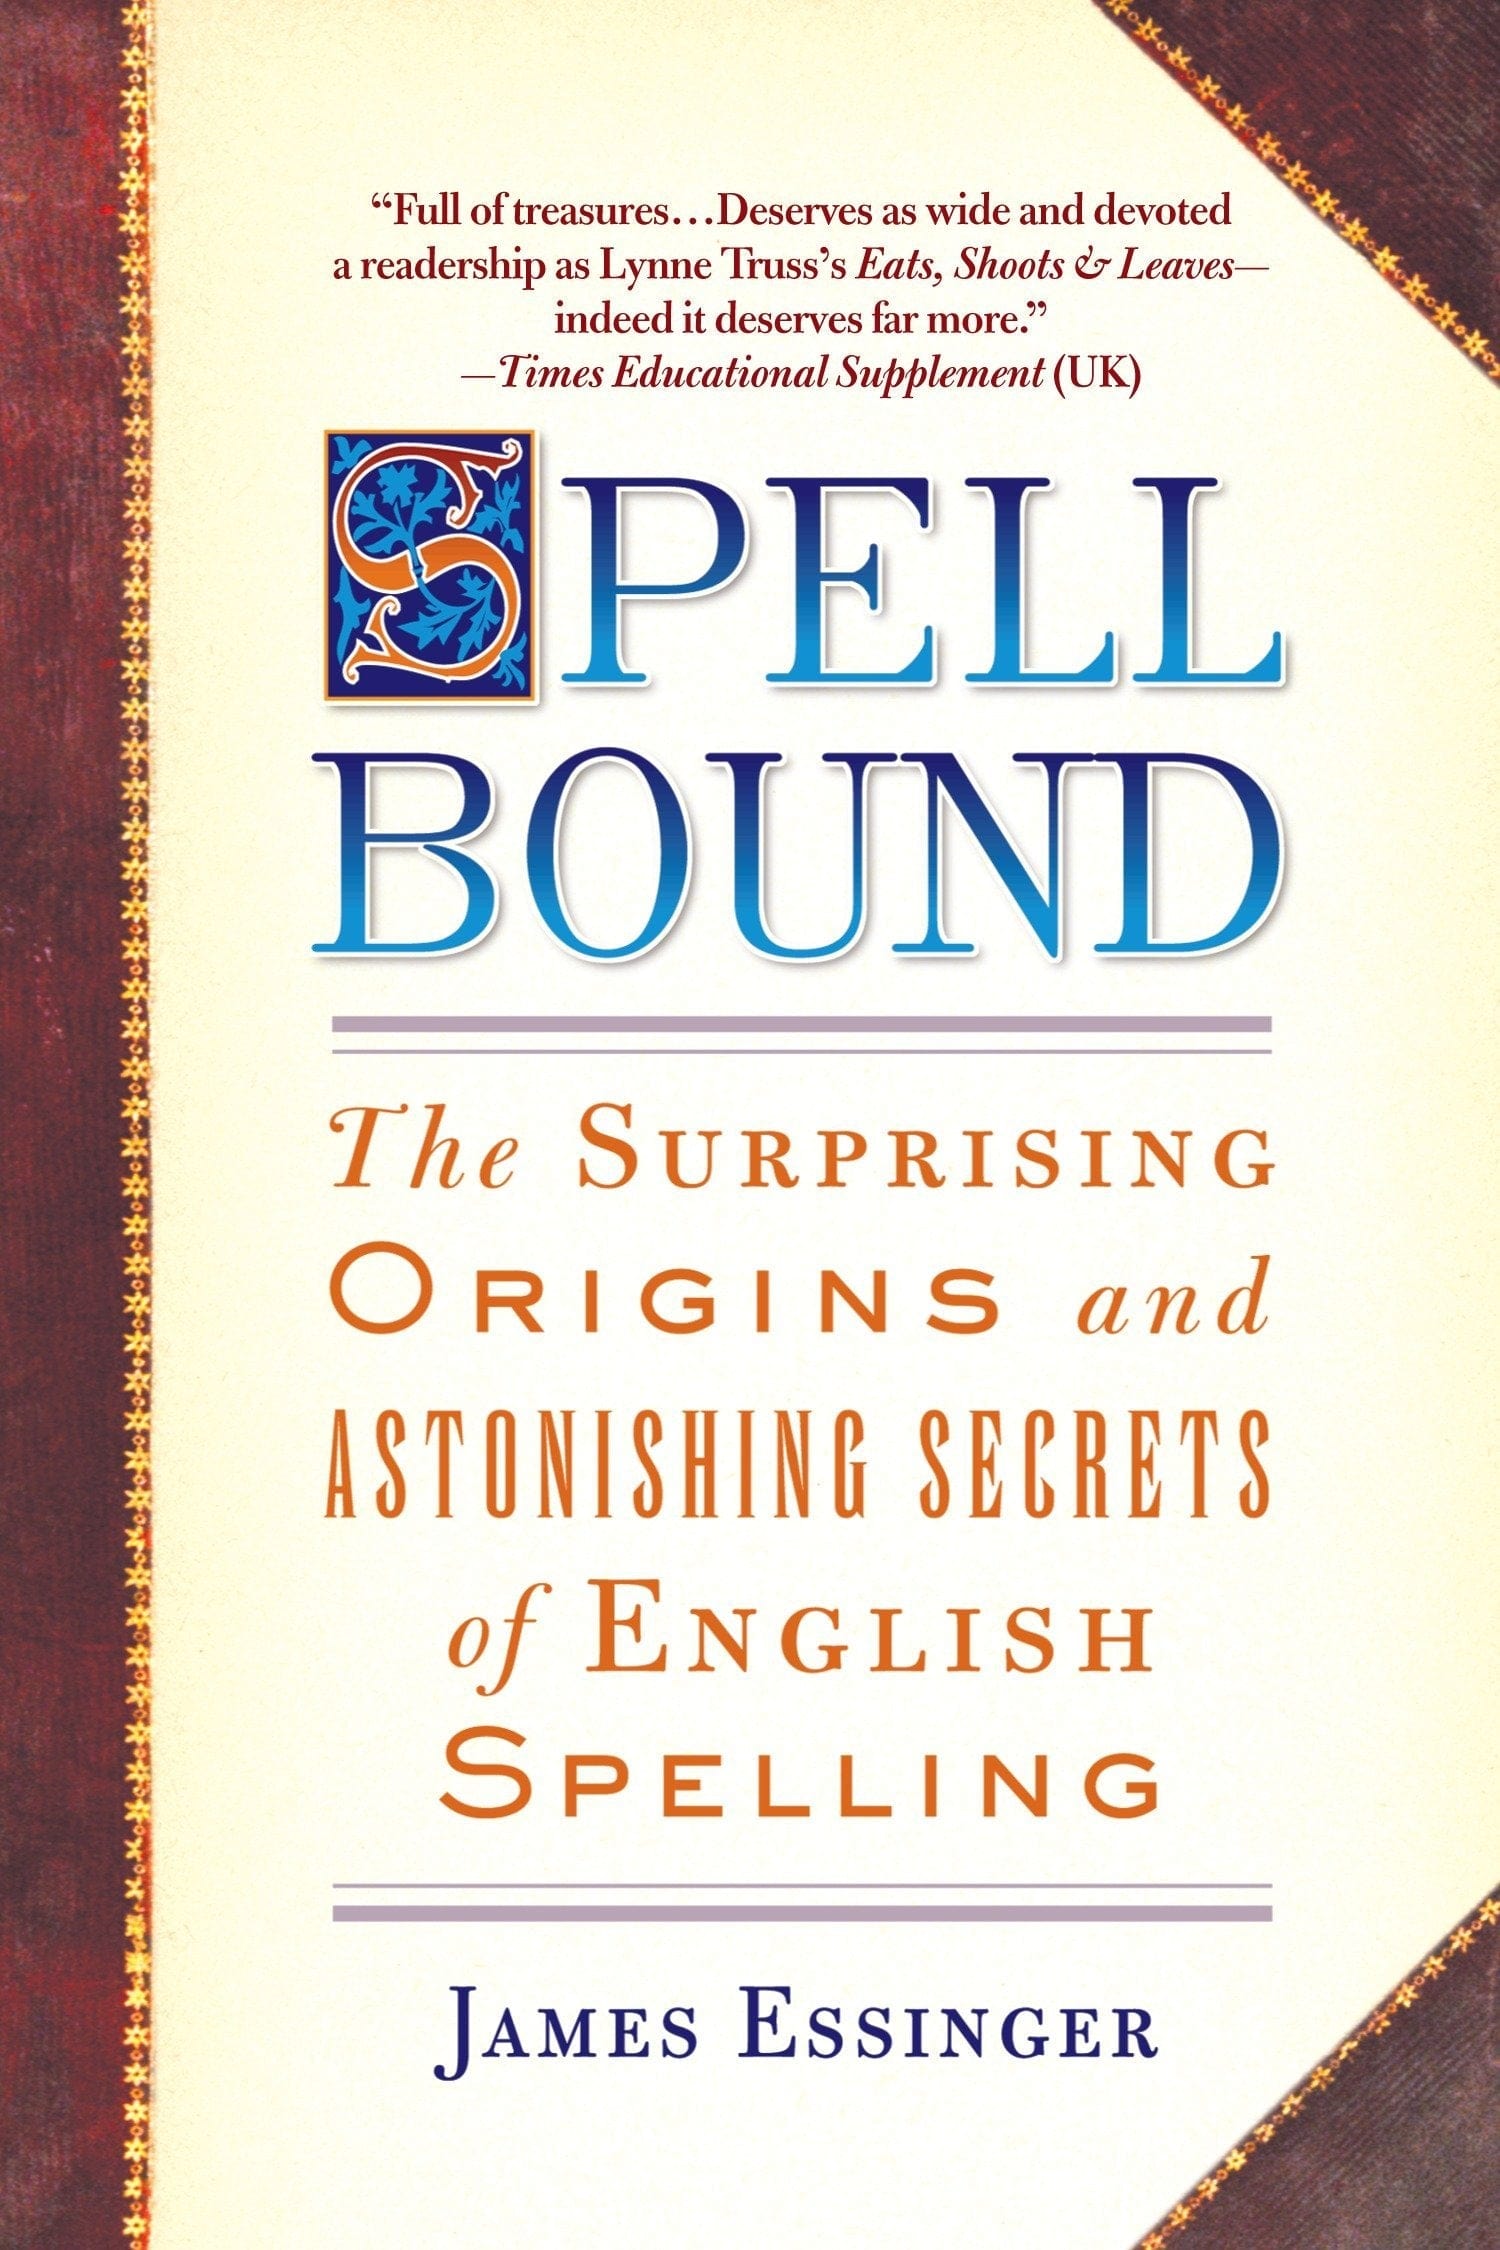 Spellbound: Surprising Origins and Astonishing Secrets of English Spelling - Third Eye